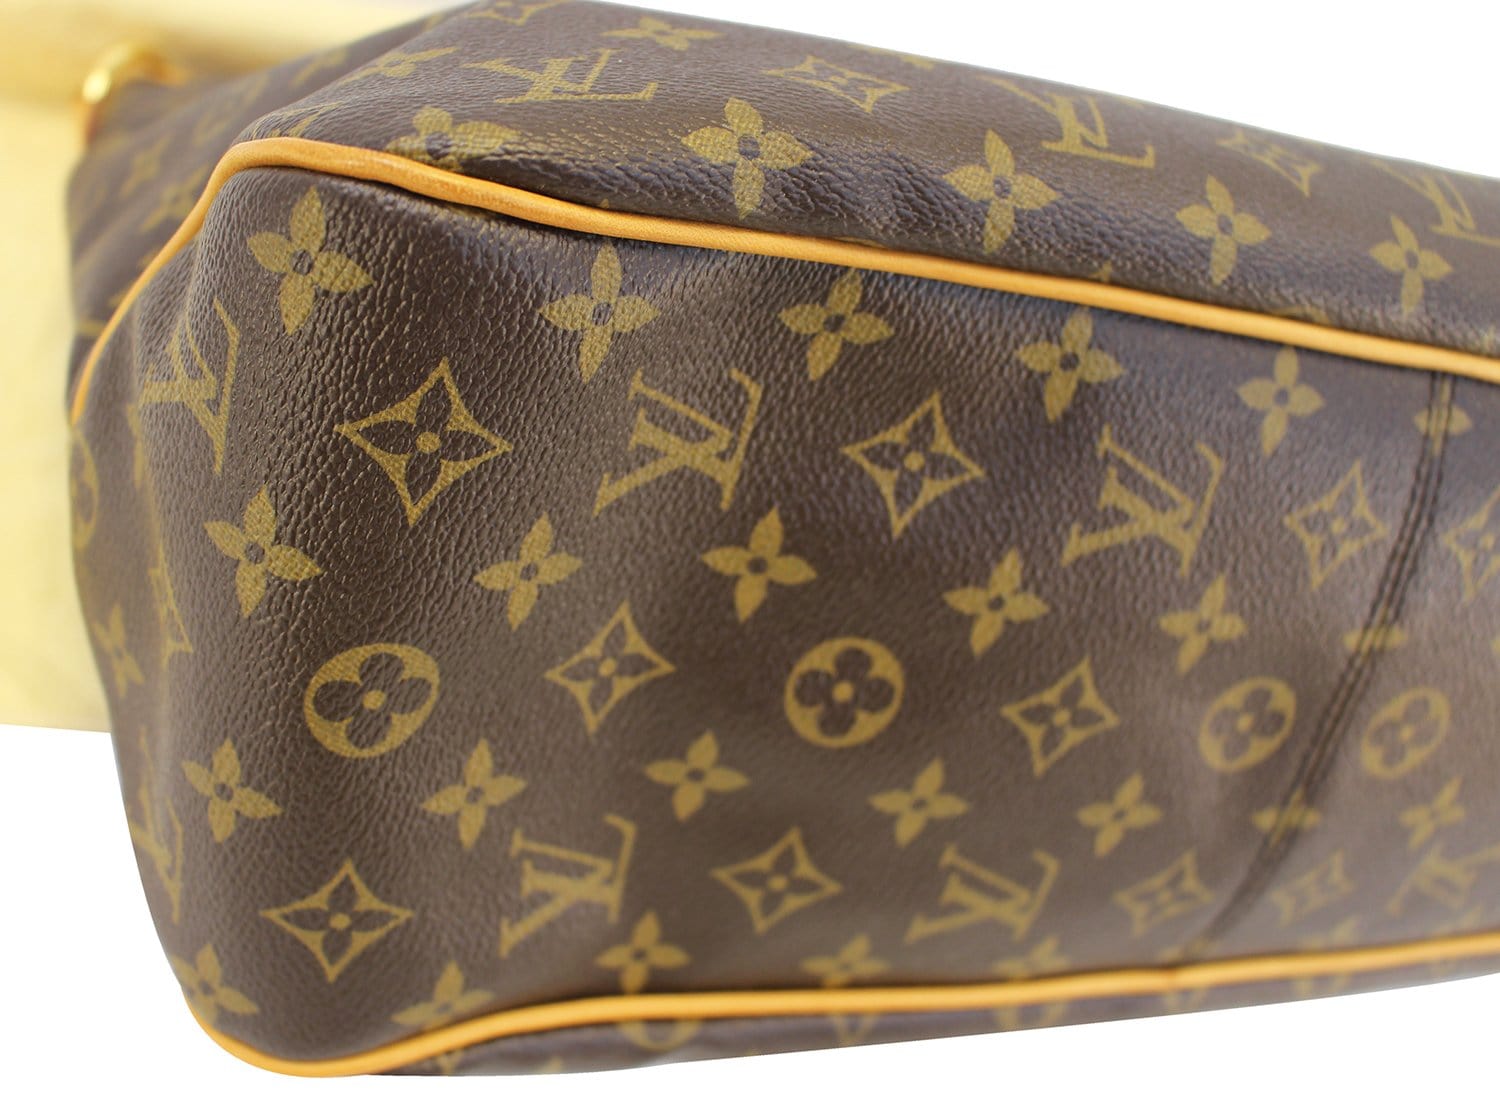 Louis Vuitton Monogram Delightful MM Hobo Bag (2013)